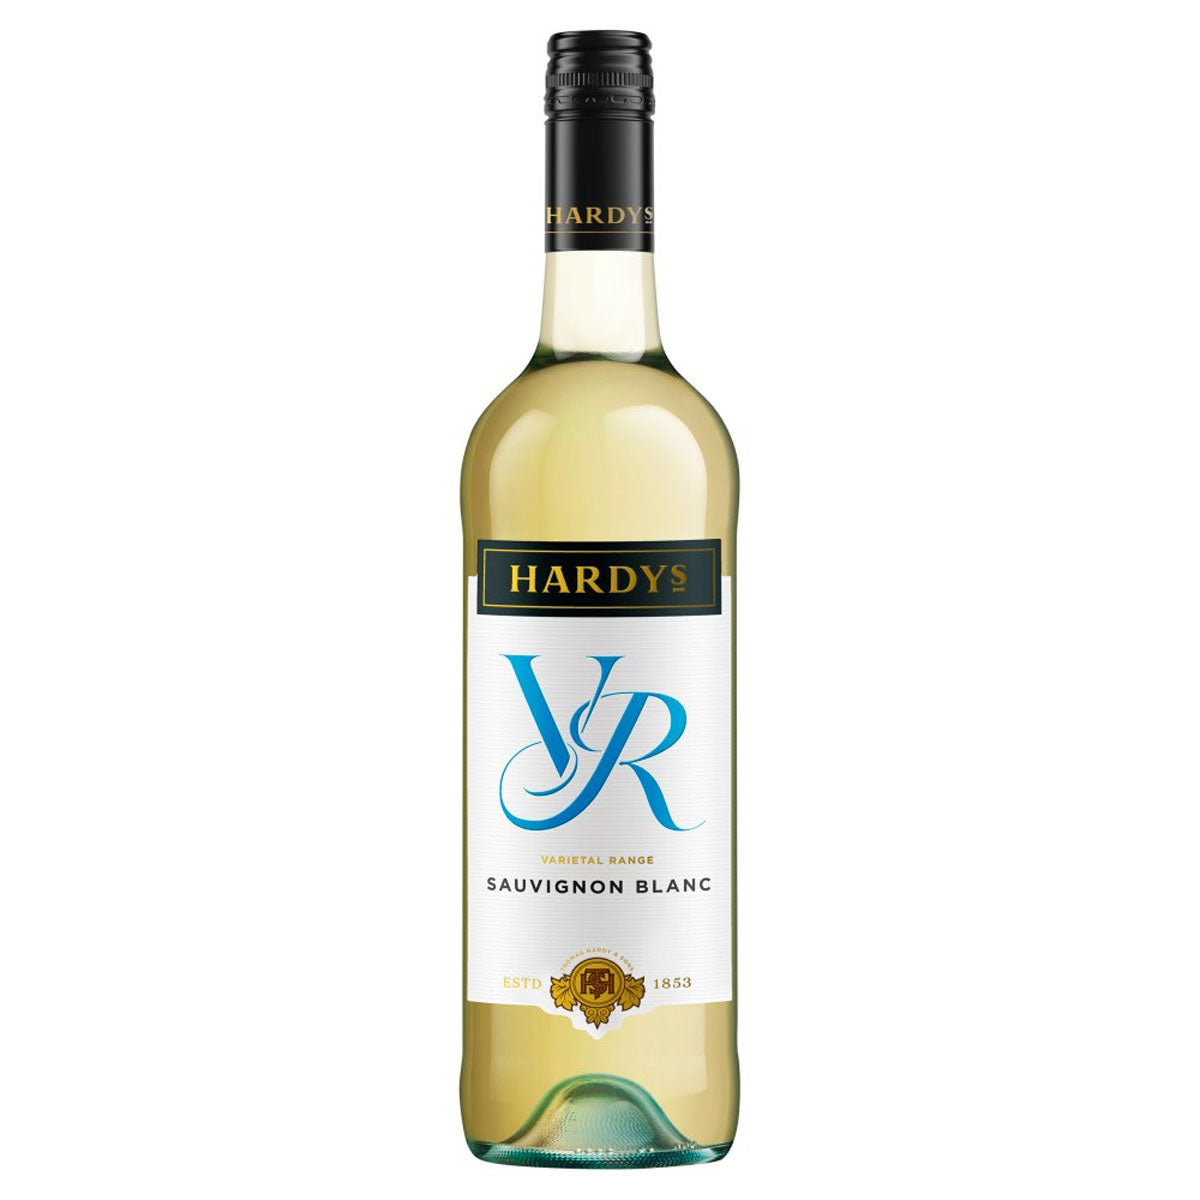 A bottle of Hardys - VR Sauvignon Blanc (11% ABV) - 750ml on a white background.